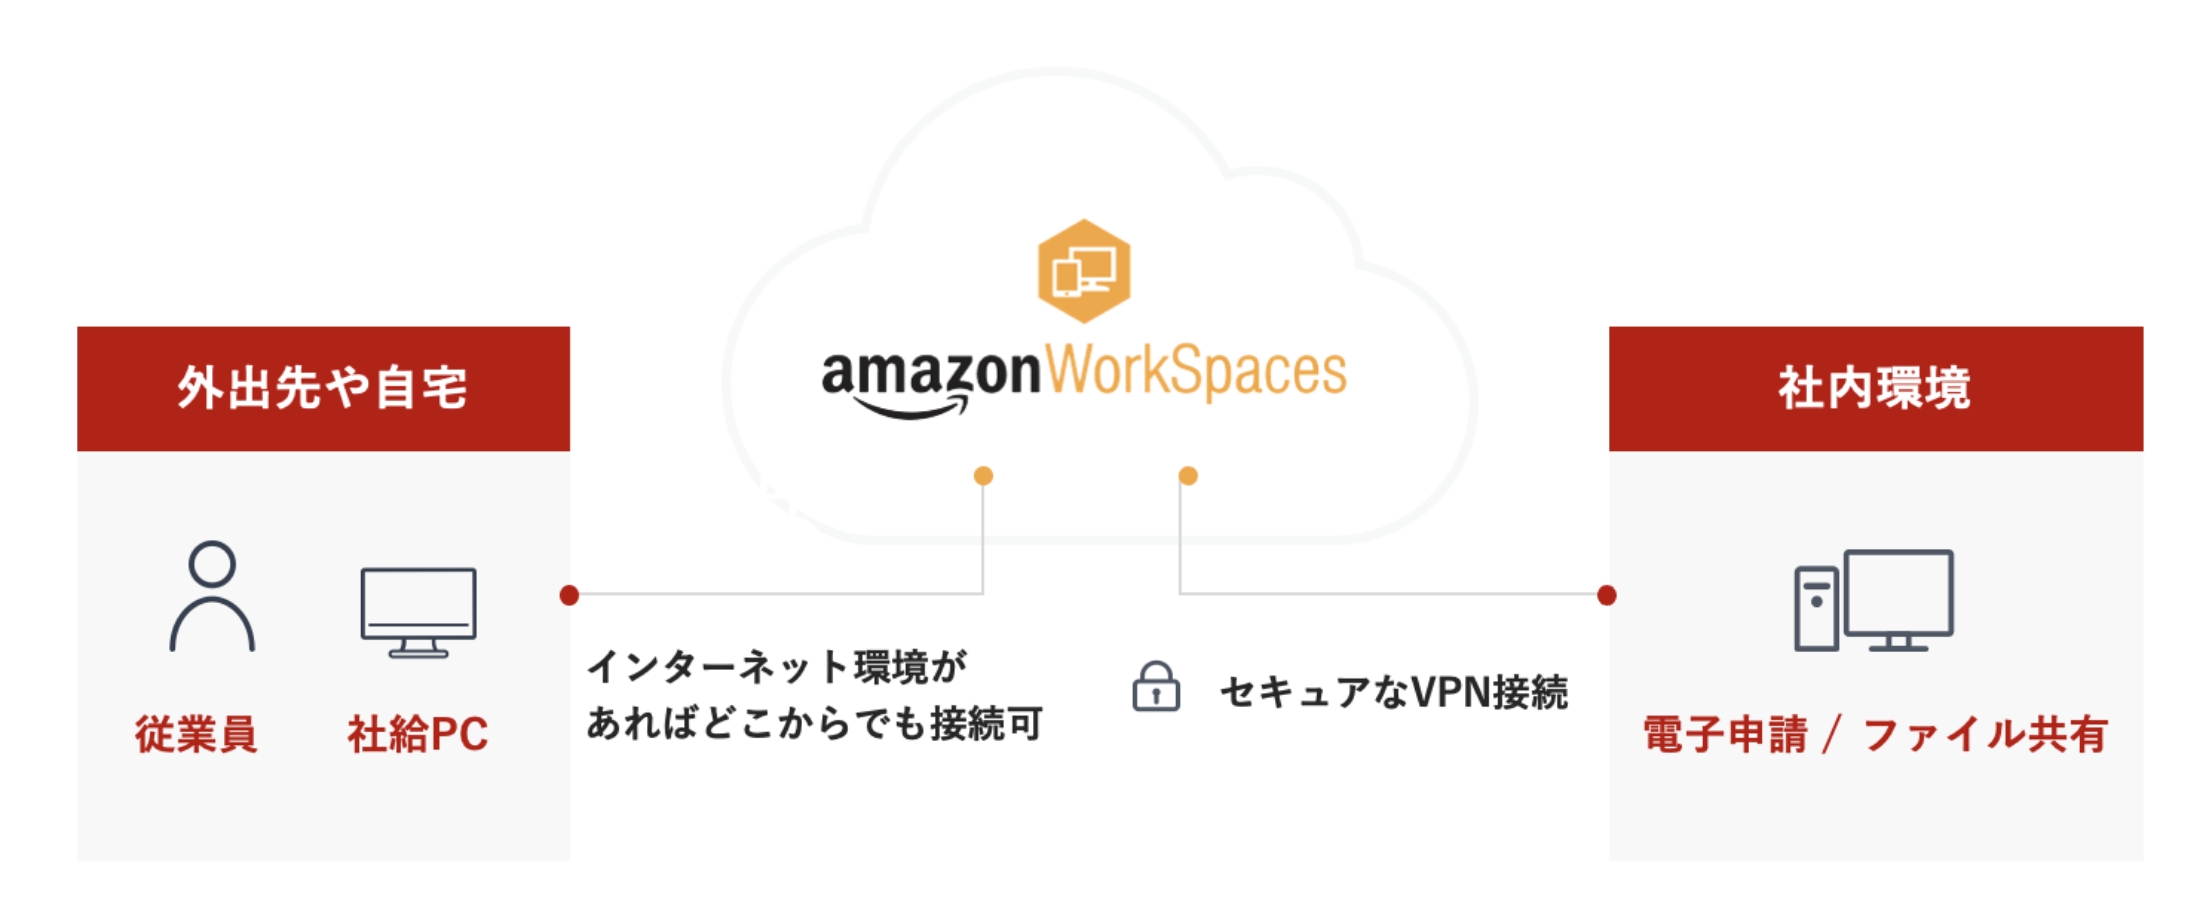 amazonWorkSpacesに外出先や自宅なら、インターネット環境があればどこからでも接続可能。社内環境であればセキュアなVPN接続が可能。